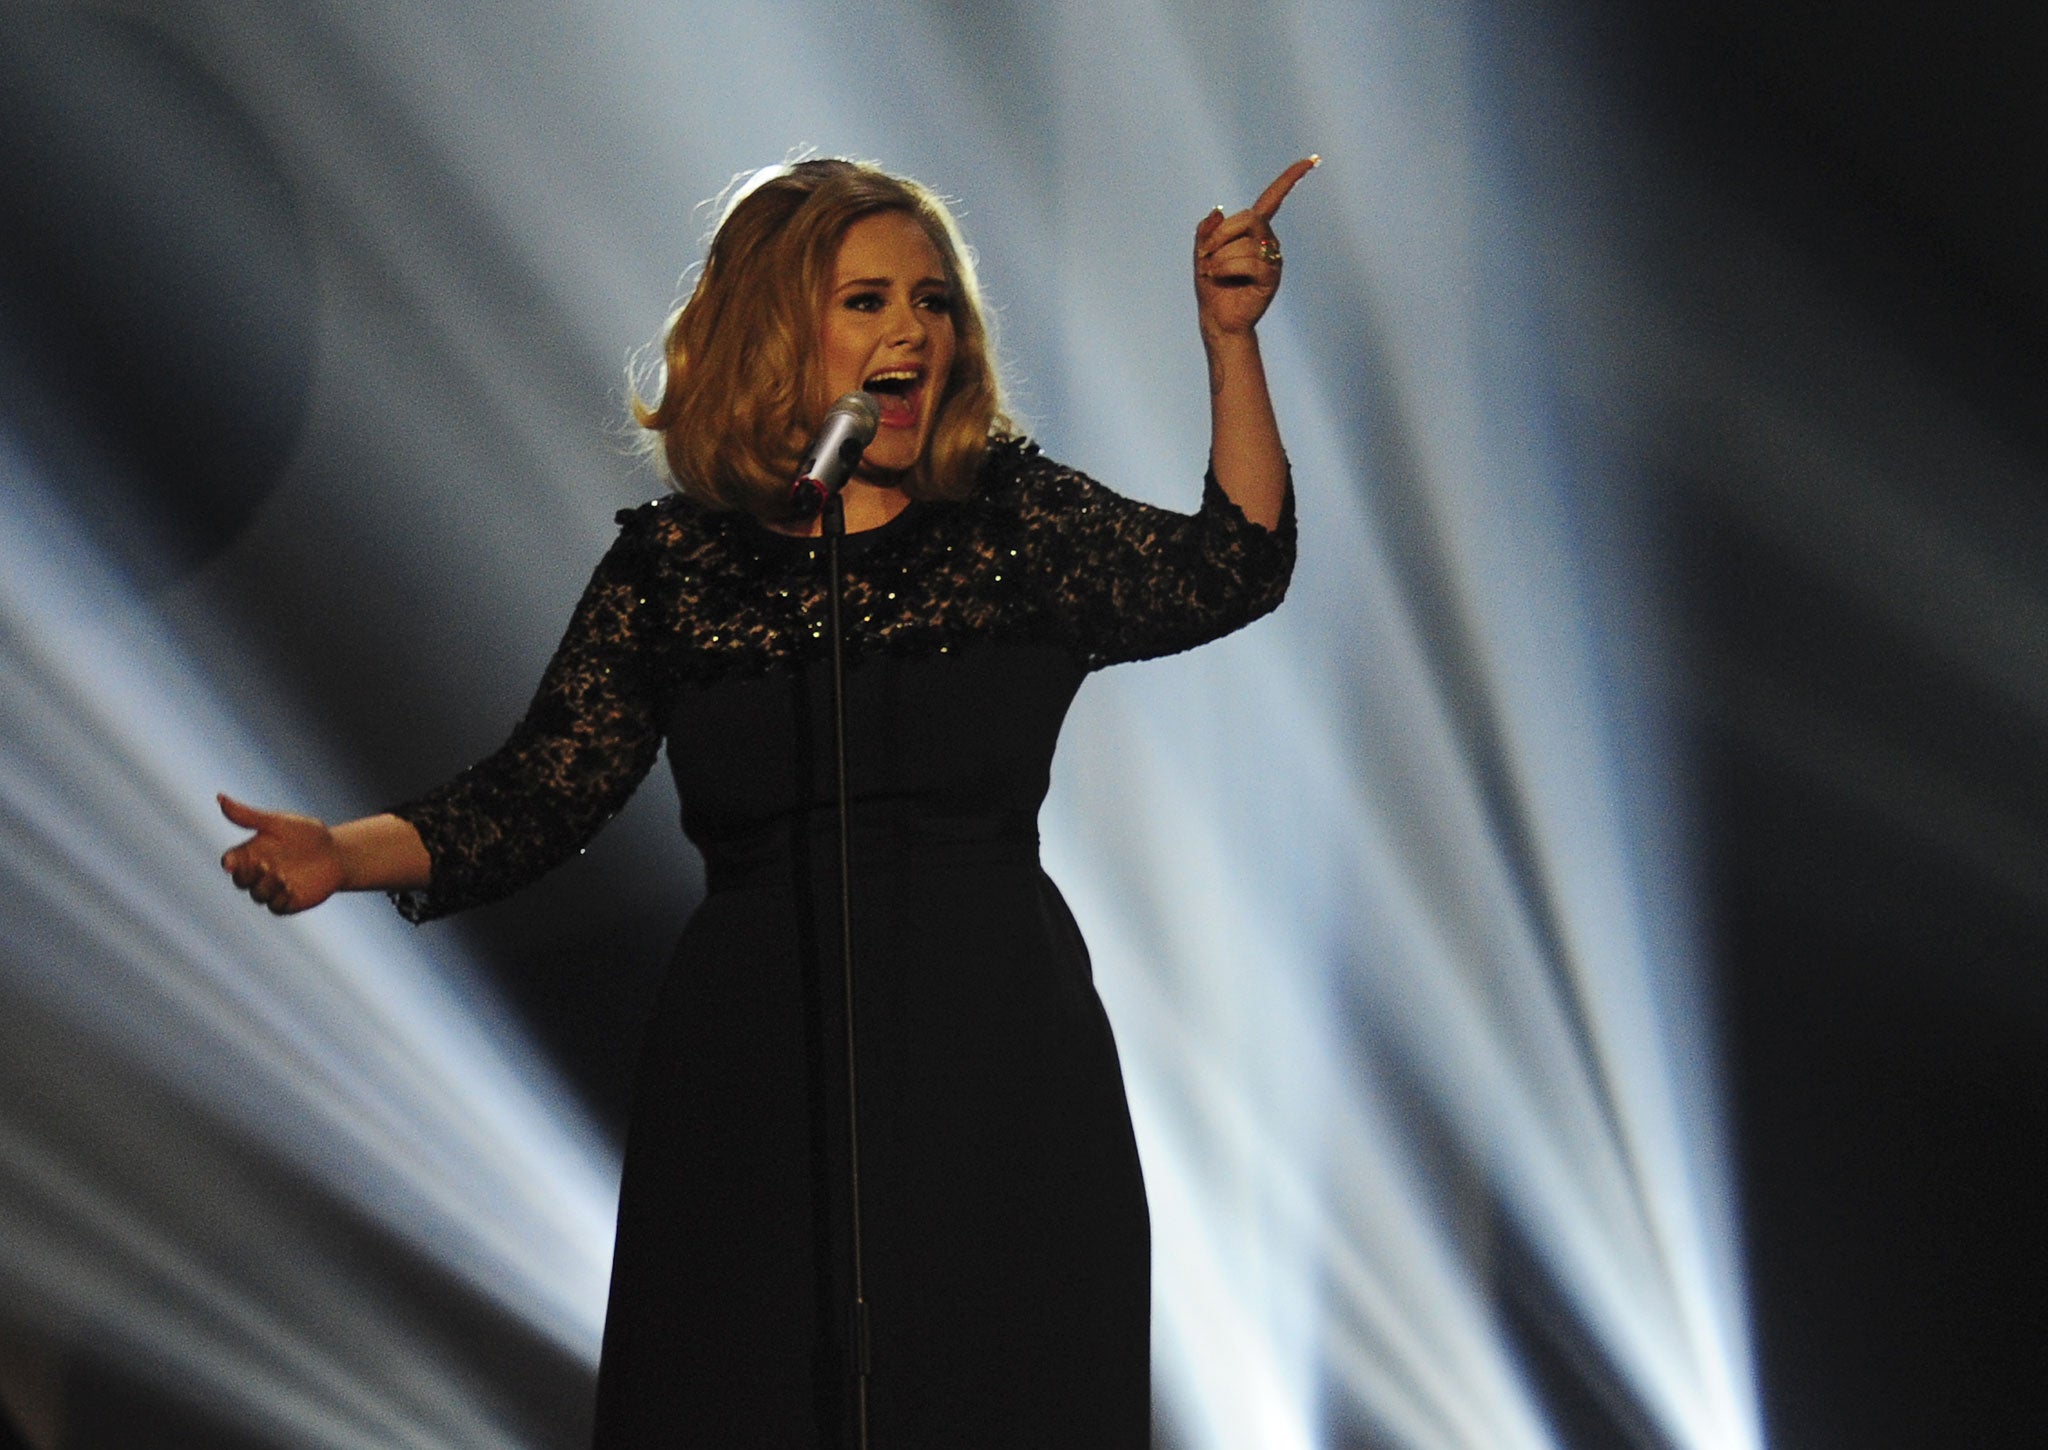 Adele has gone on to achieve global acclaim